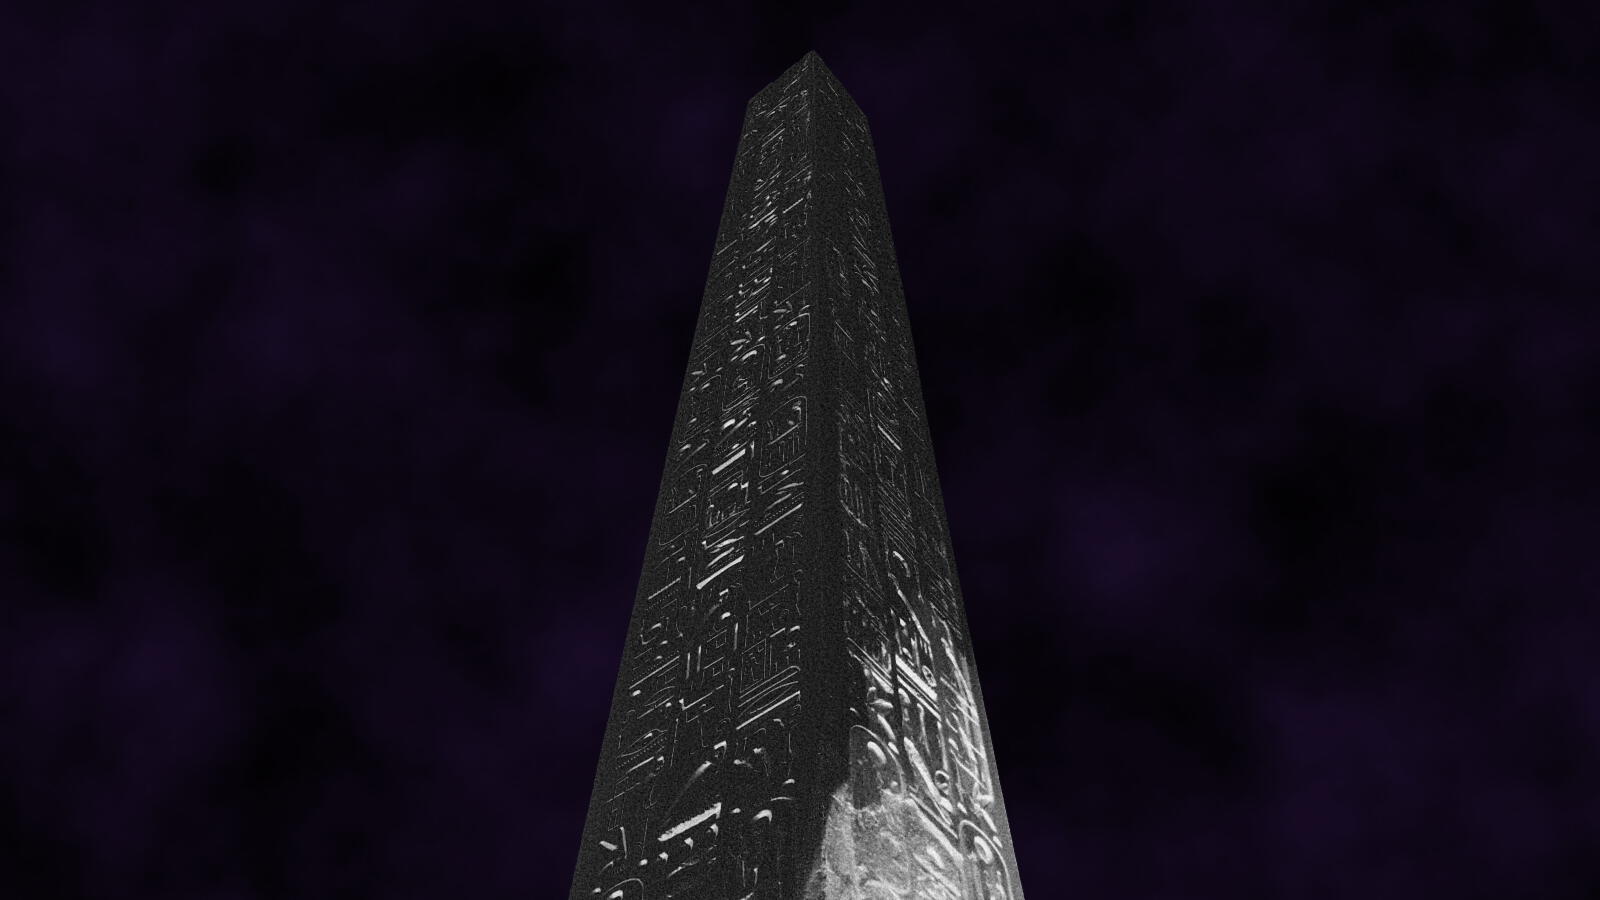 the black obelisk calls to you